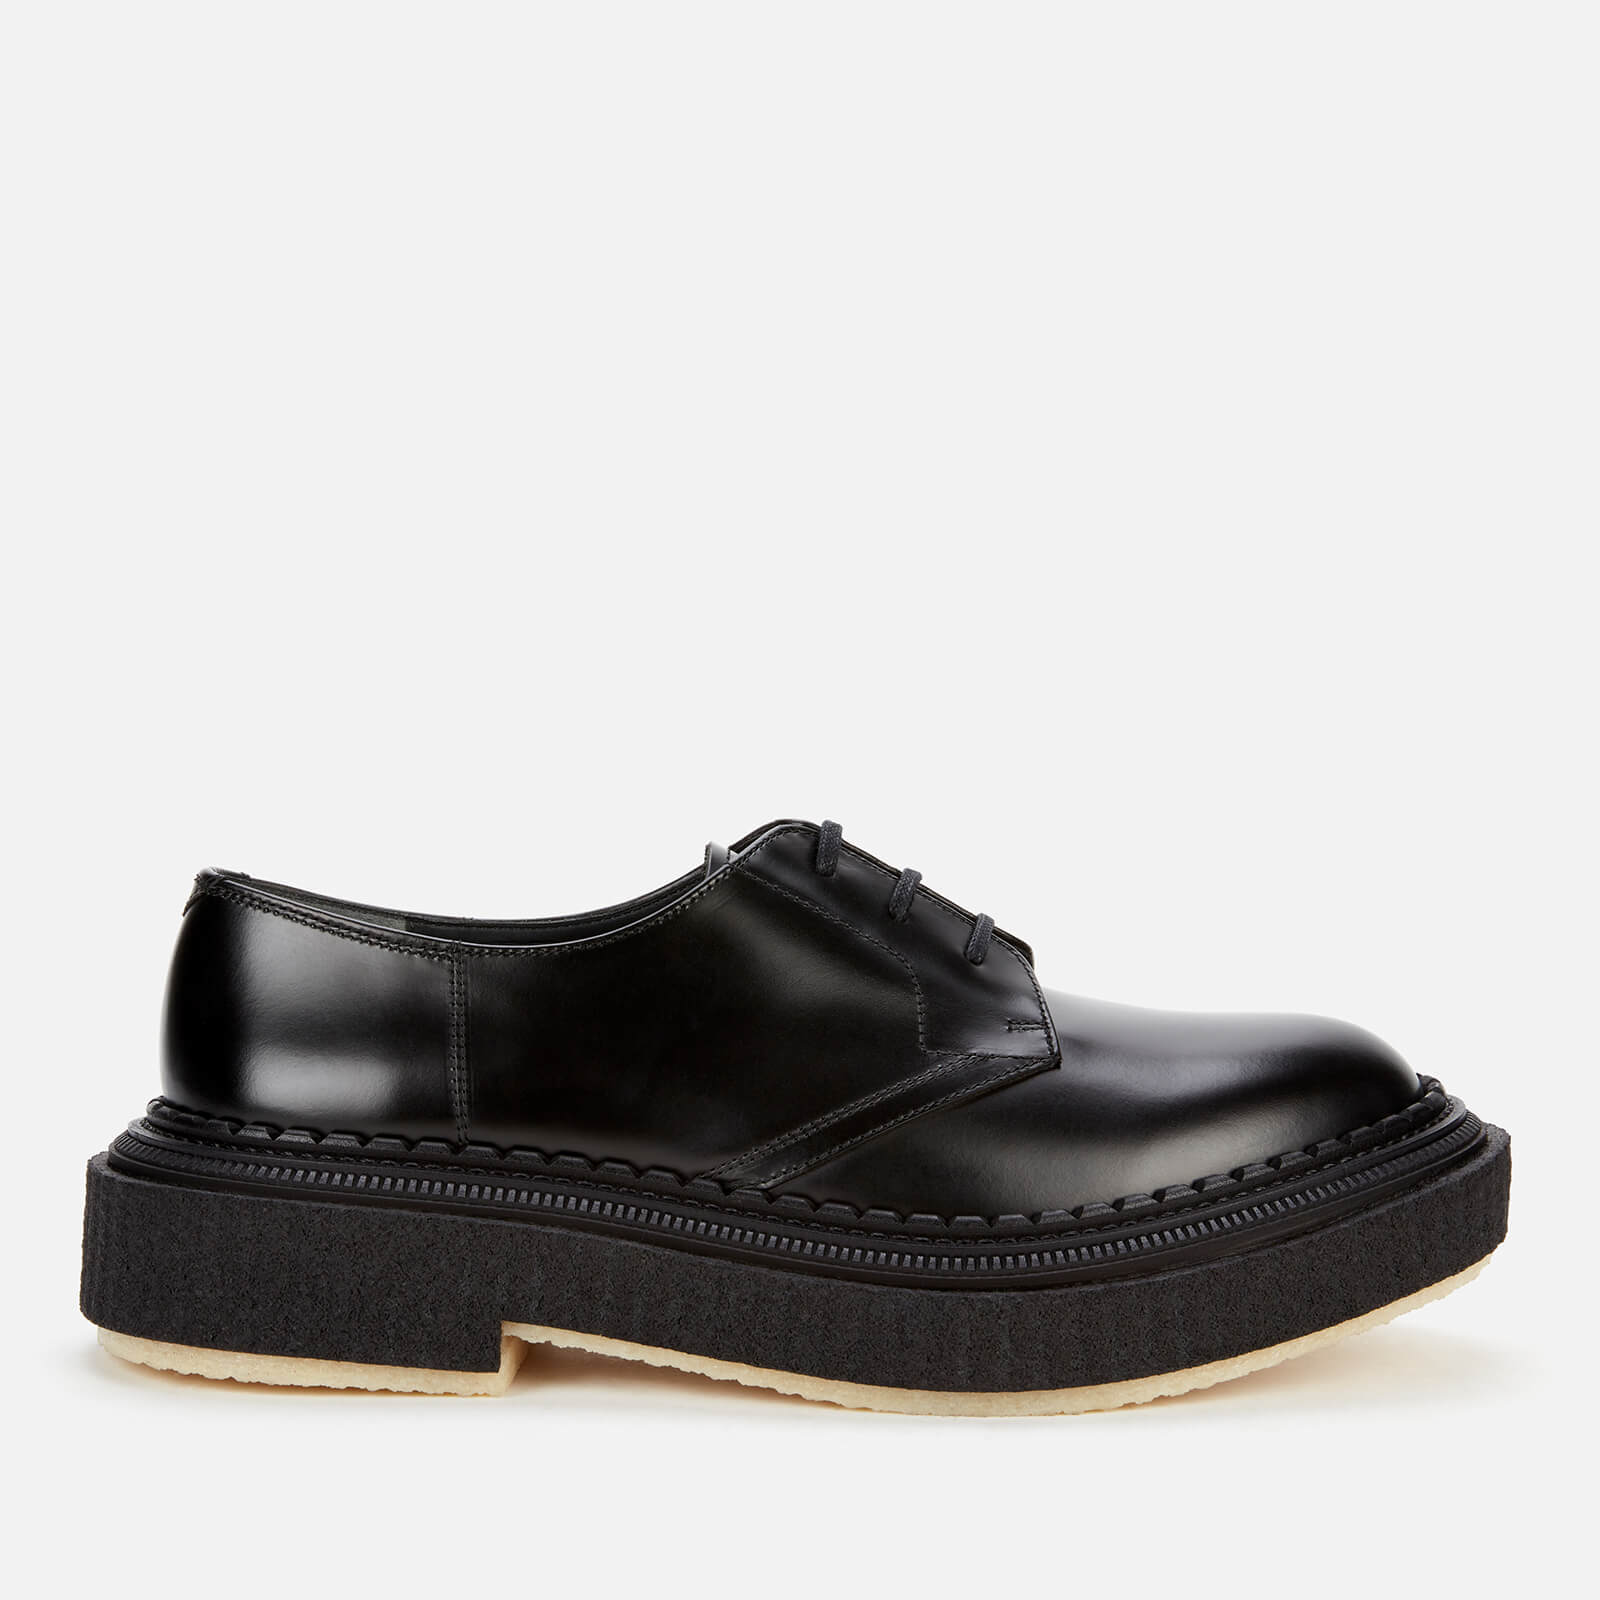 Adieu Men's Type 135 Leather Derby Shoes - Black - UK 8